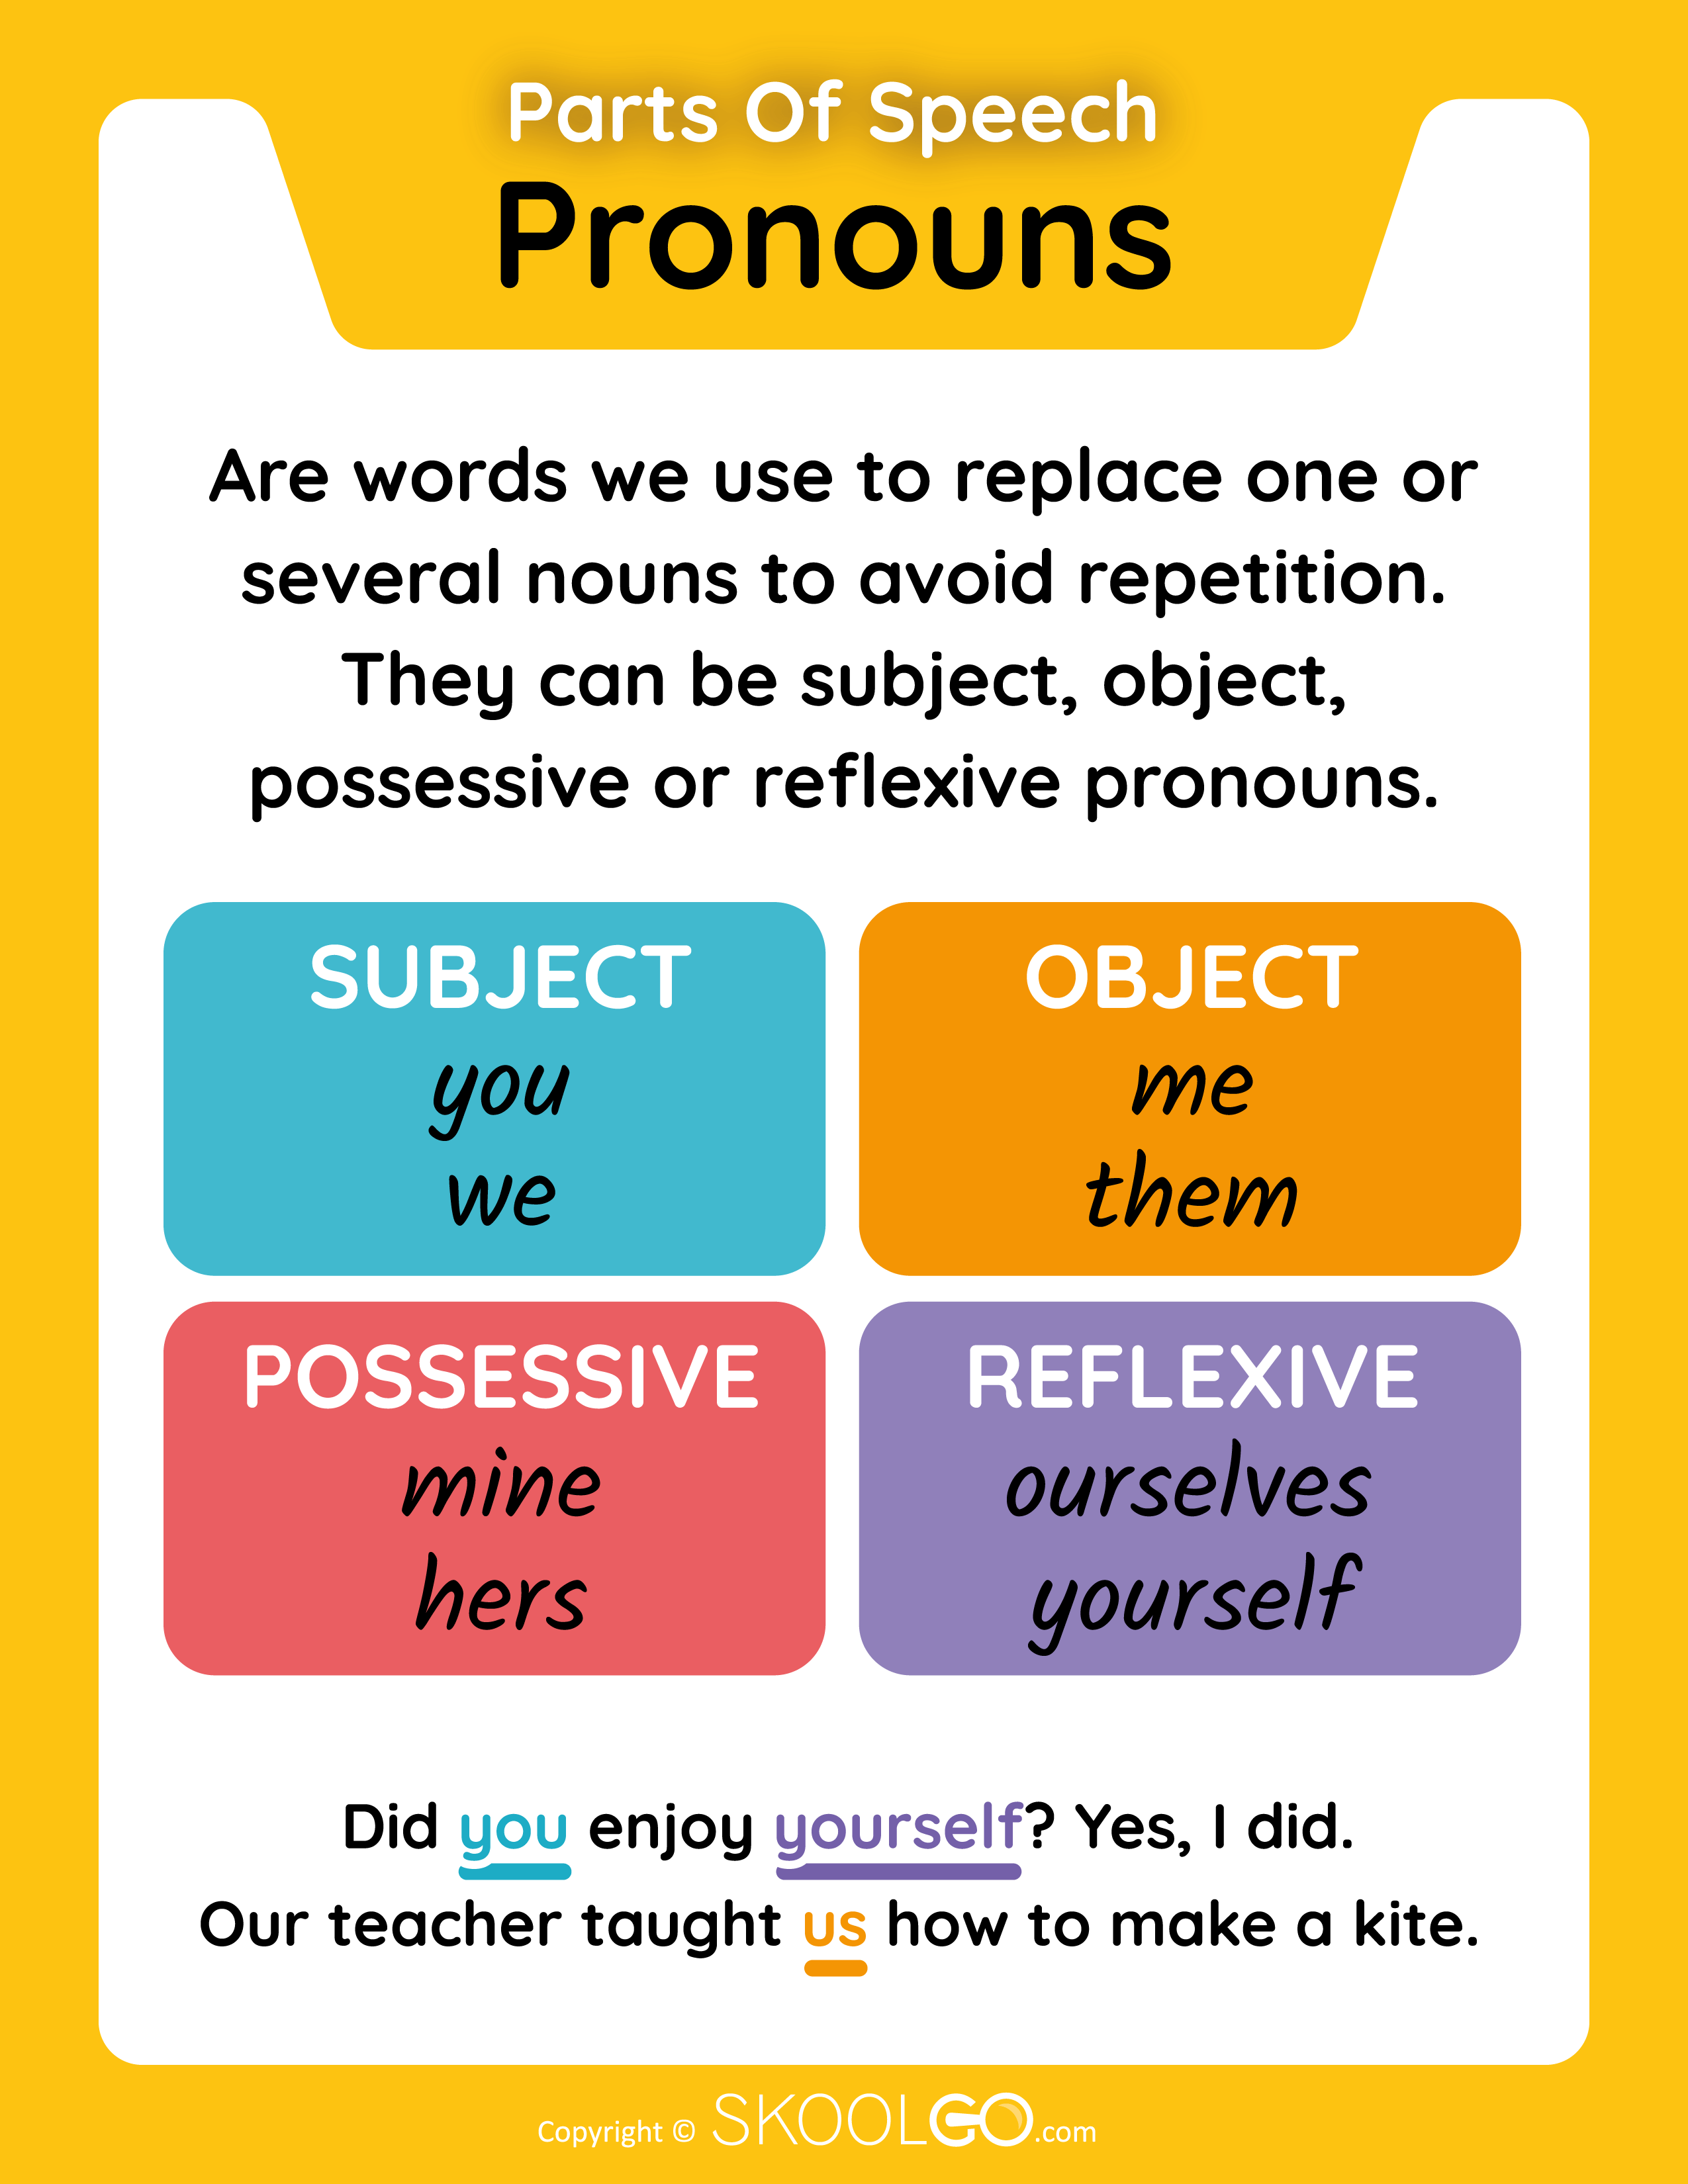 Pronouns - Parts Of Speech - Free Classroom Poster